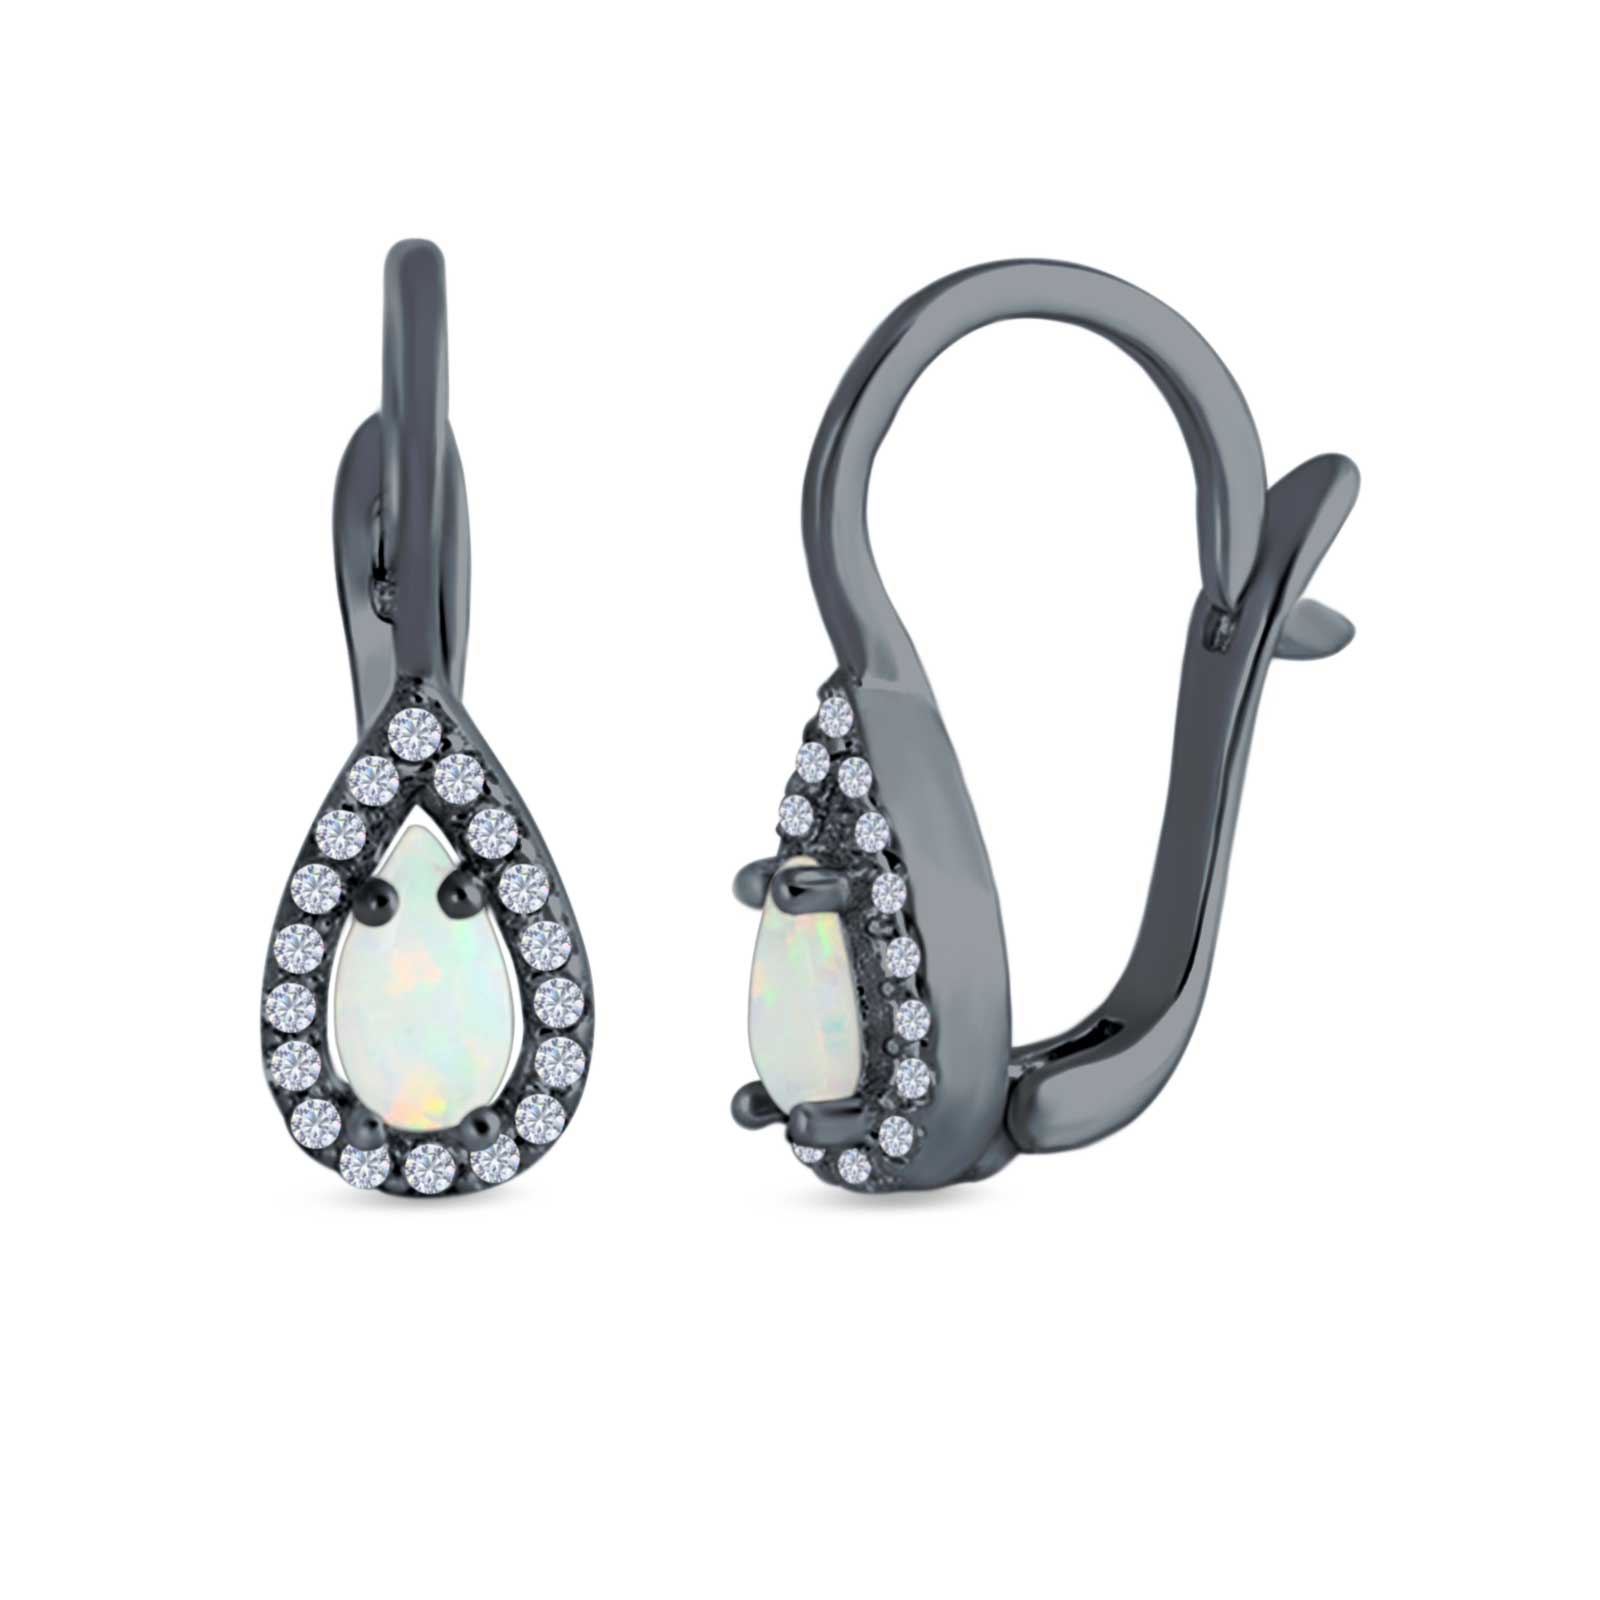 Halo Latchback Earrings Hoop Huggie Design Pear Created Opal Simulated CZ 925 Sterlig Silver(17mm)